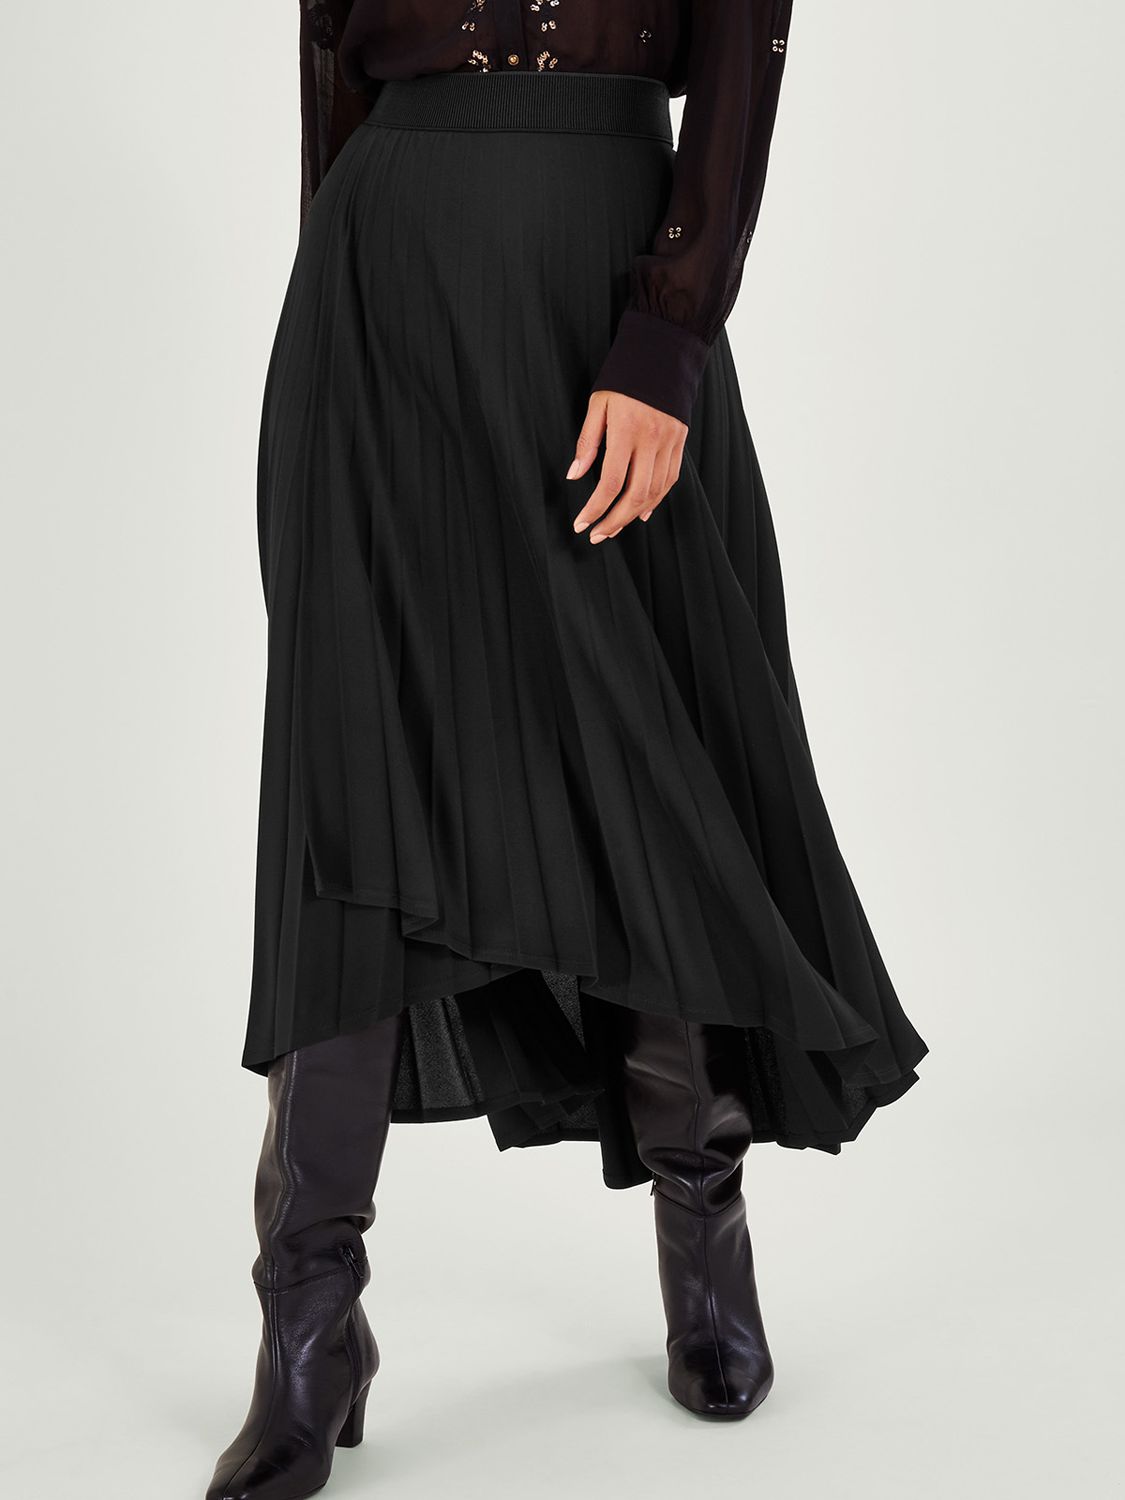 Women's Skirts - Black, Pleated